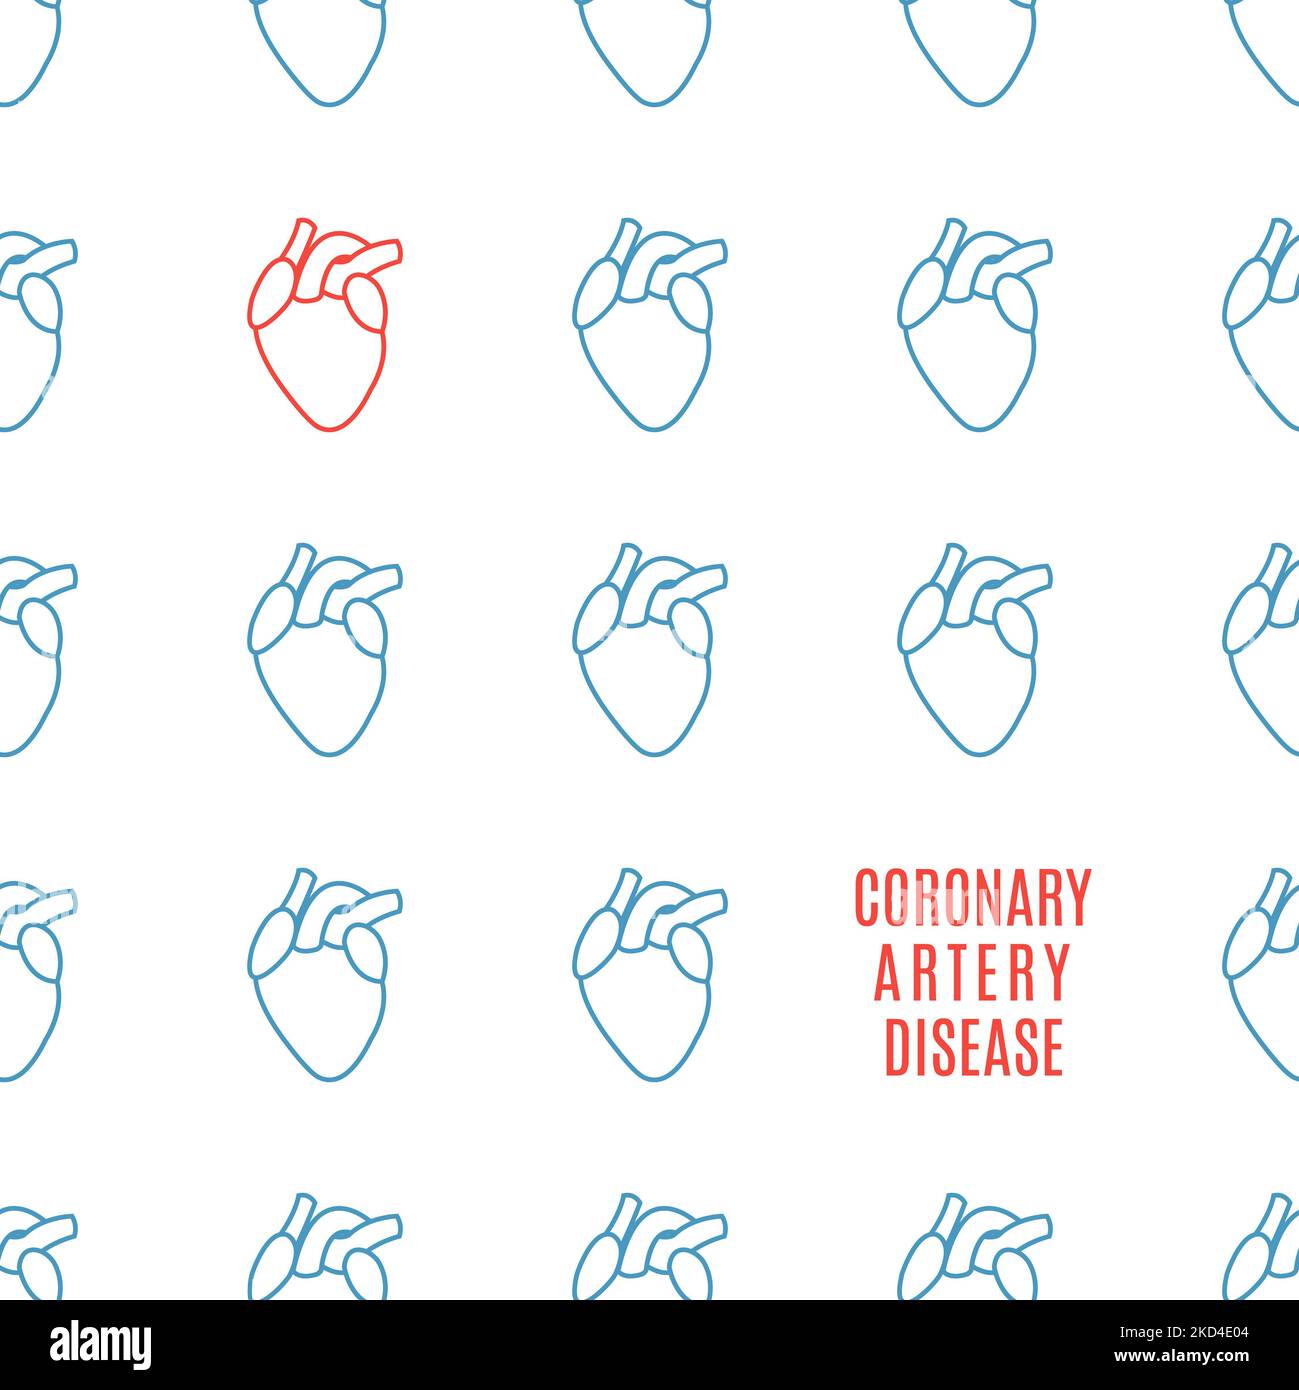 Coronary artery disease, conceptual illustration Stock Photo